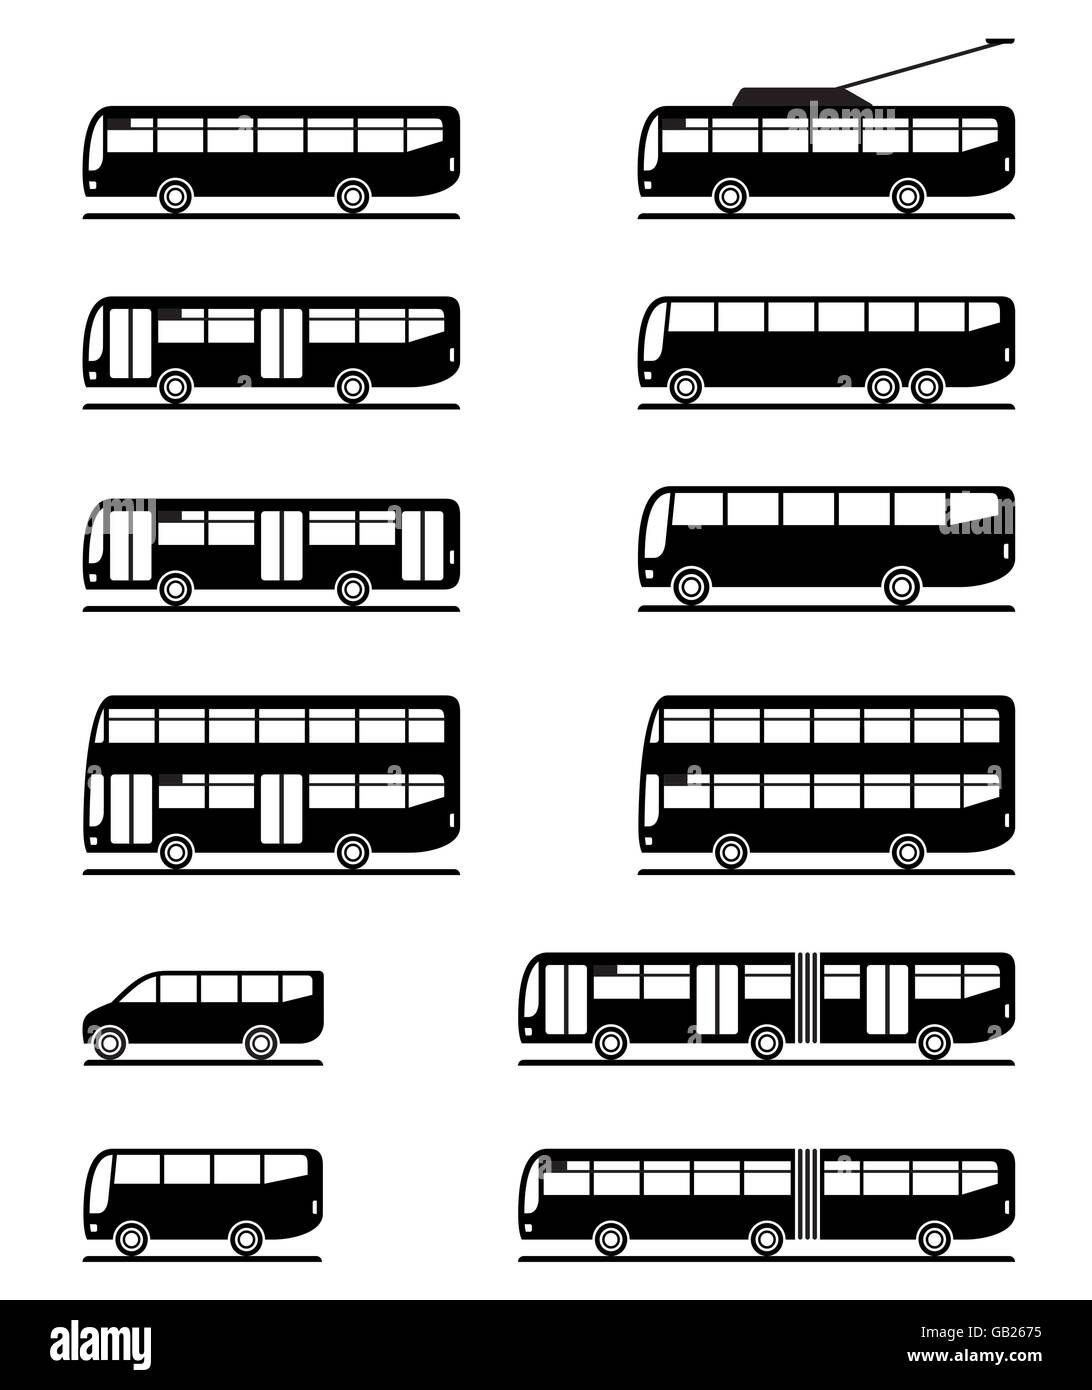 Linien- und Reisebusse - Vektor-illustration Stock Vektor